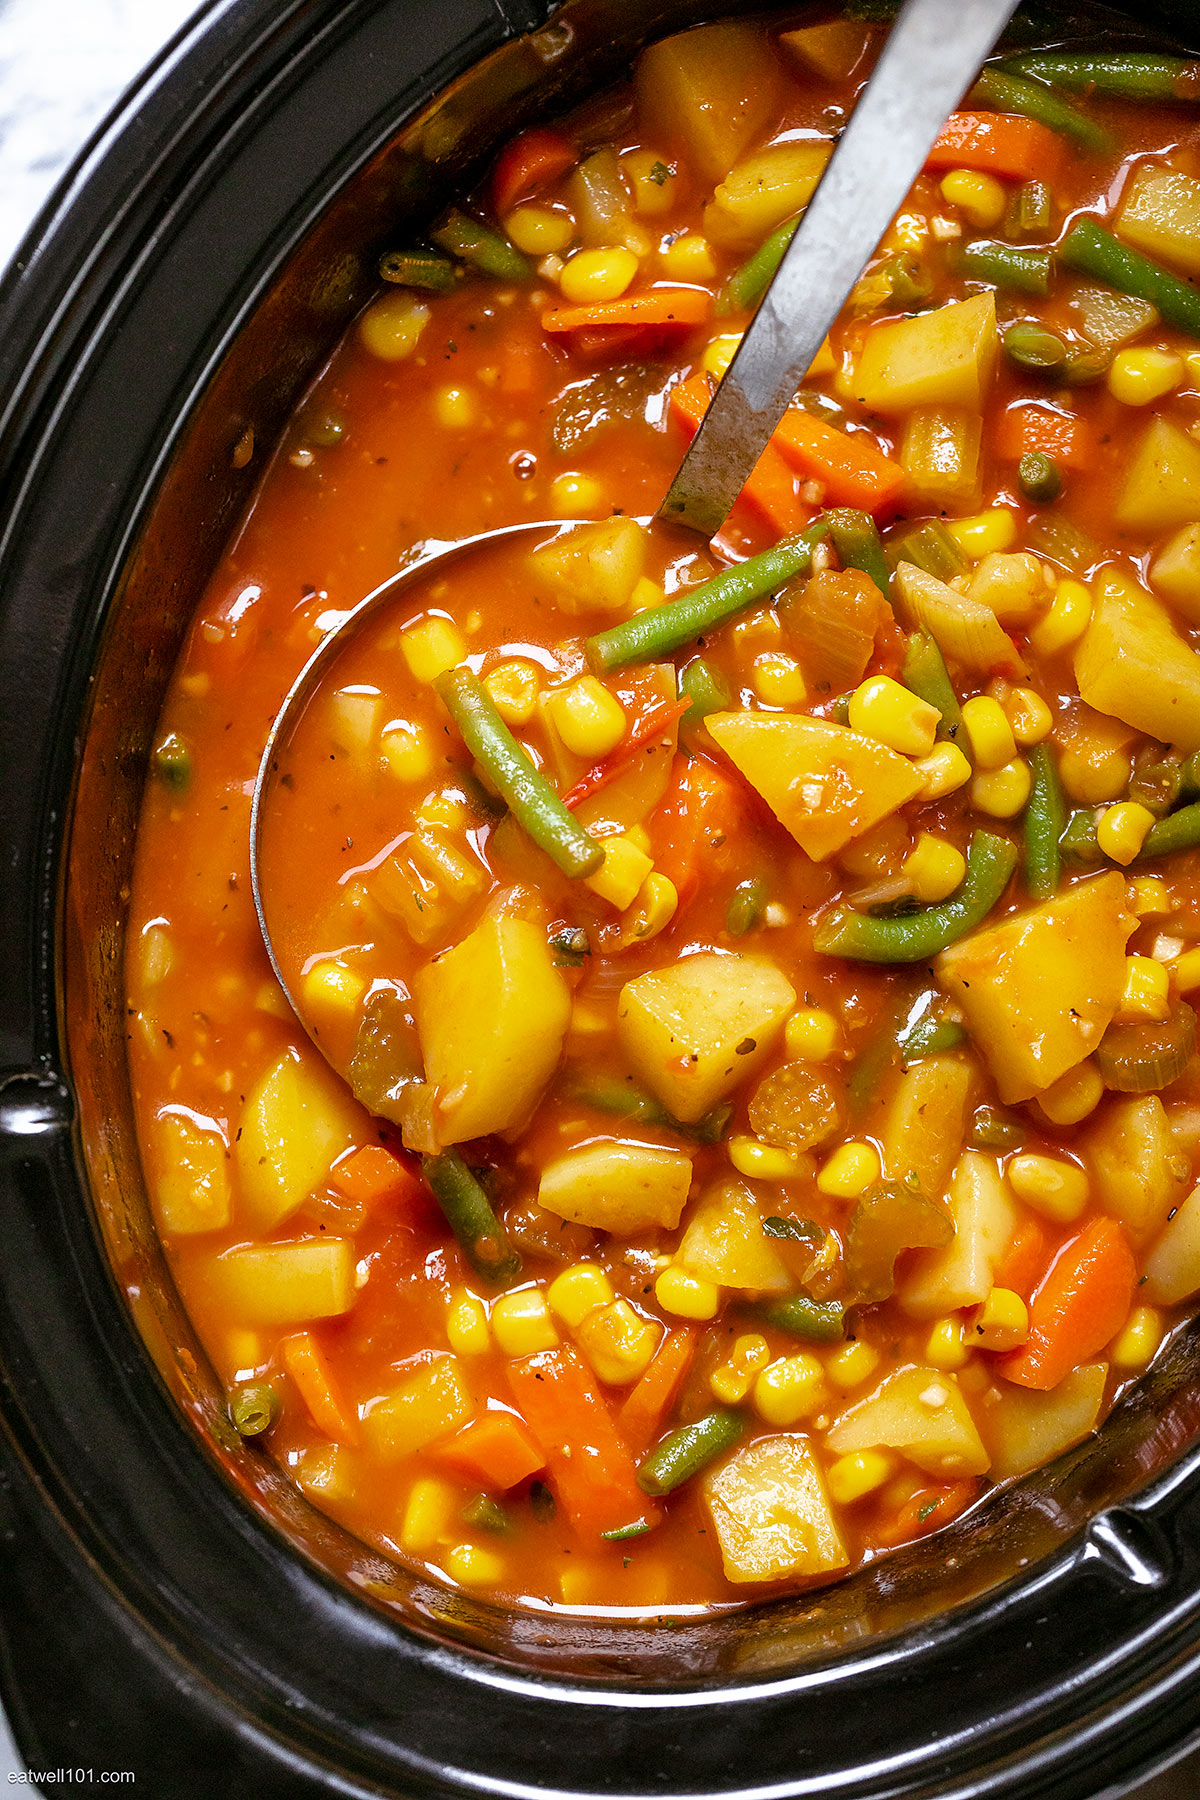 https://www.eatwell101.com/wp-content/uploads/2022/02/Slow-Cooker-Vegetable-Soup-recipe-1.jpg